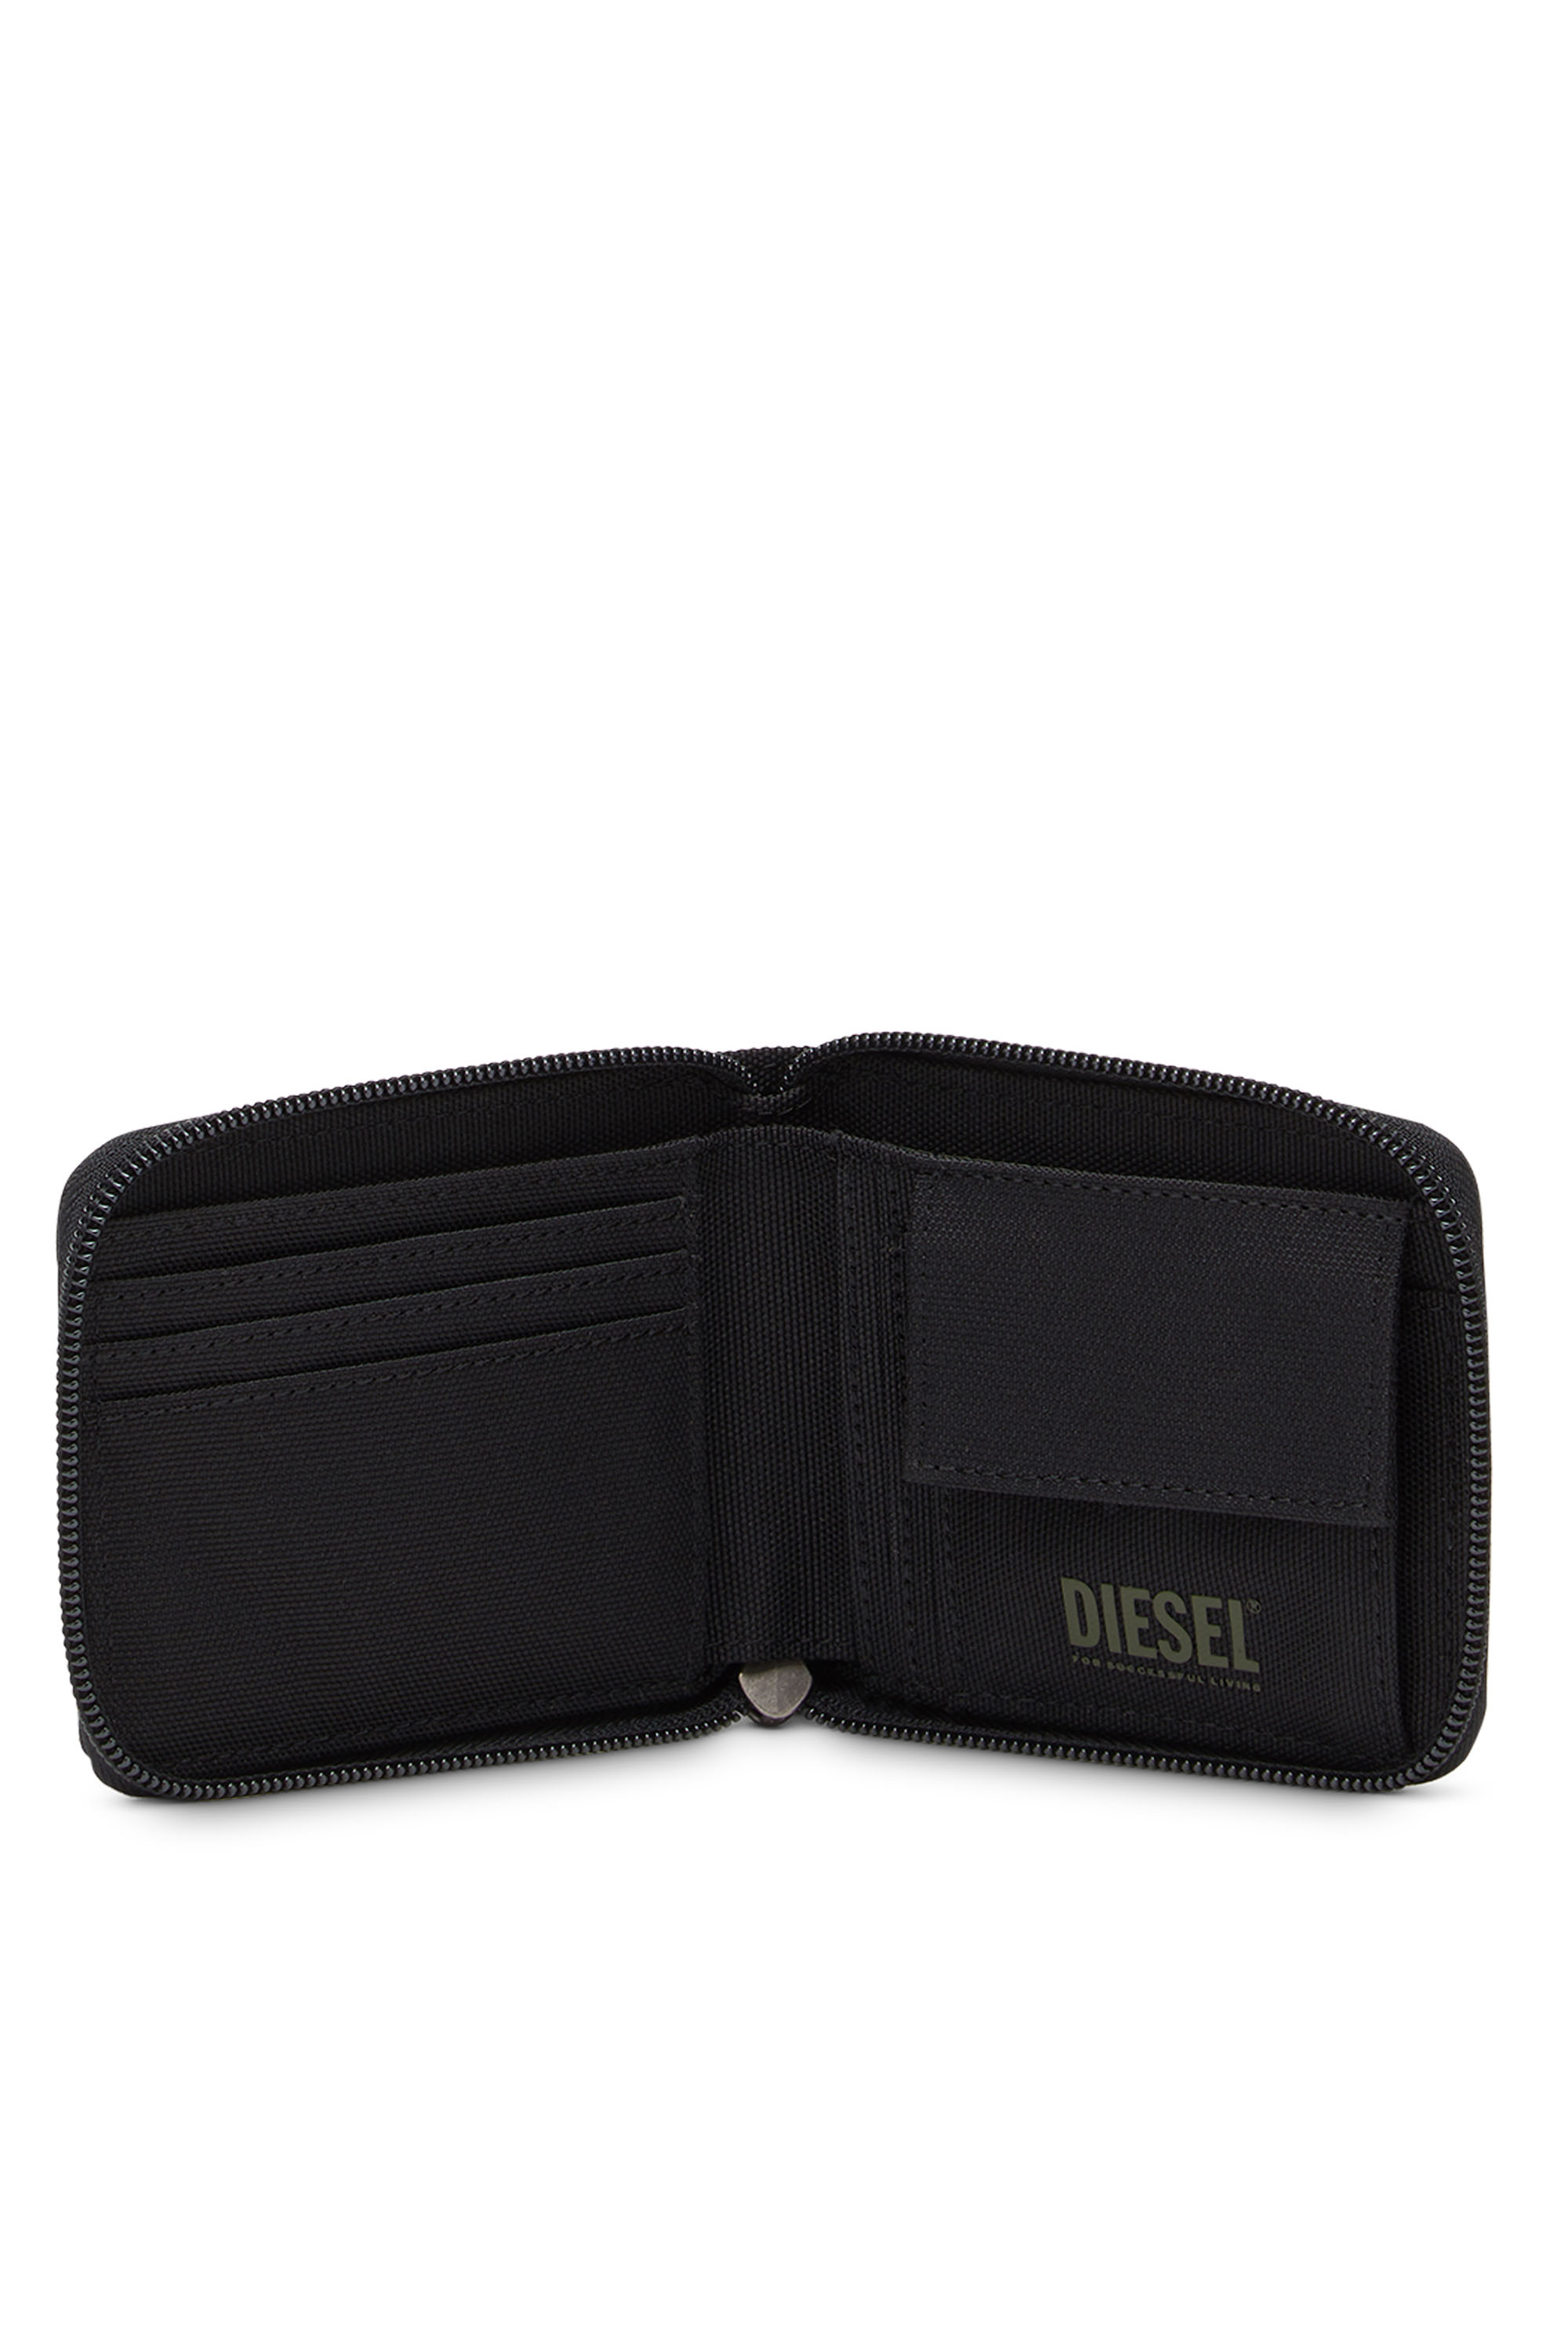 Diesel - HIRESH XS ZIPPI, Black - Image 3